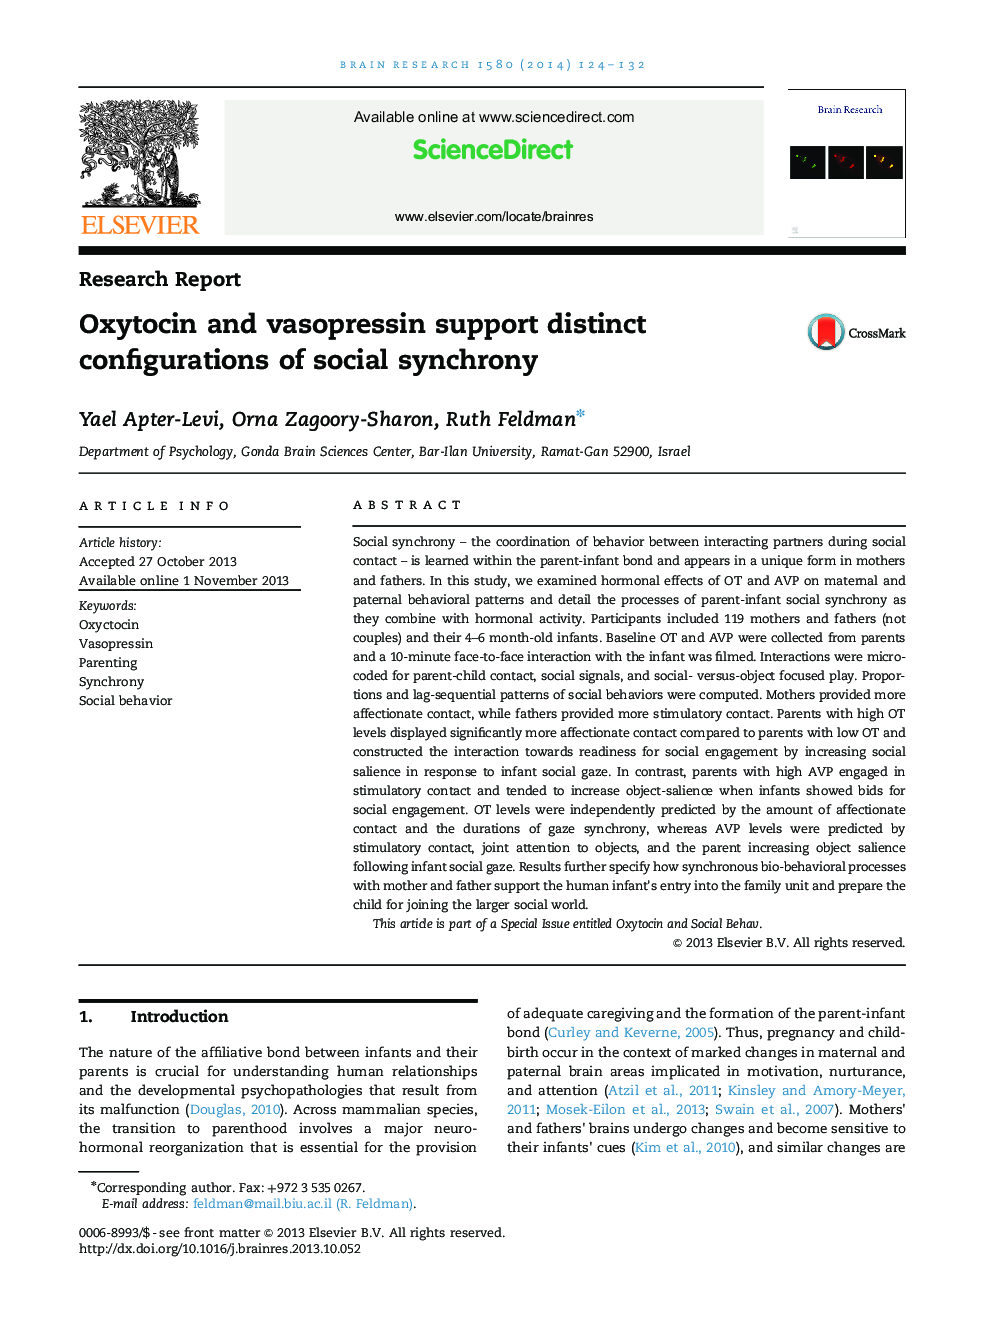 Oxytocin and vasopressin support distinct configurations of social synchrony